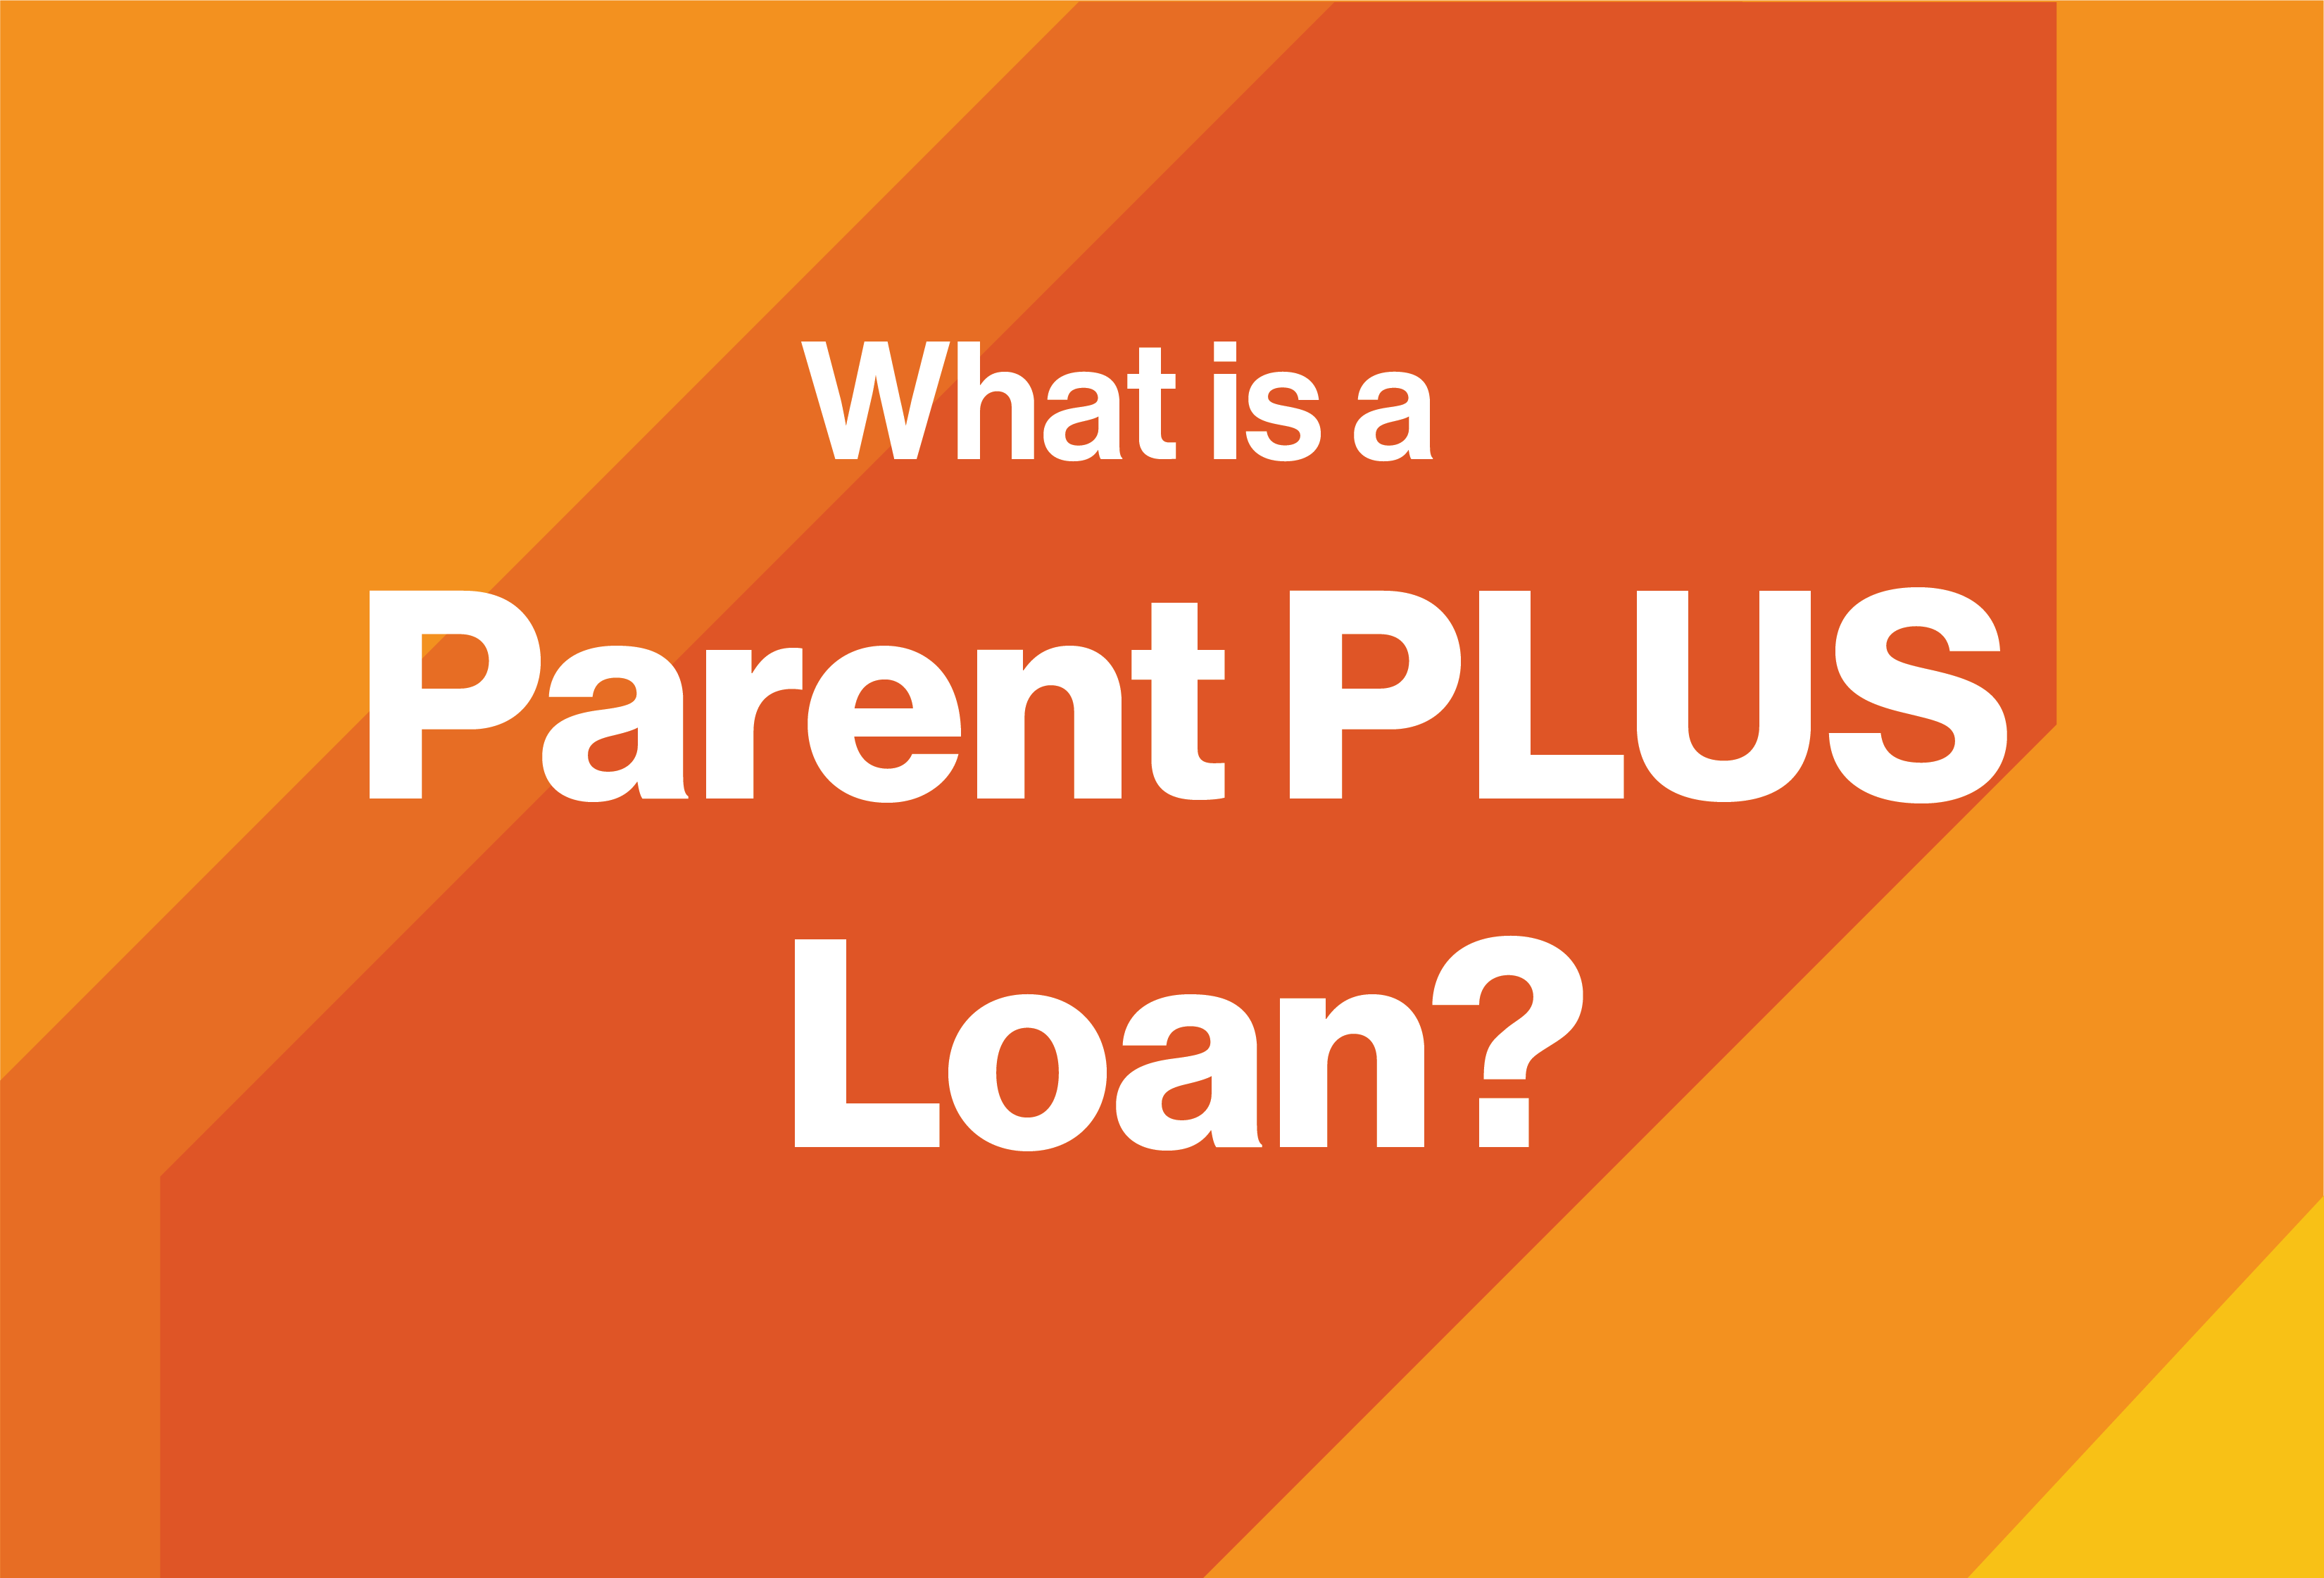 What is a Parent PLUS Loan?